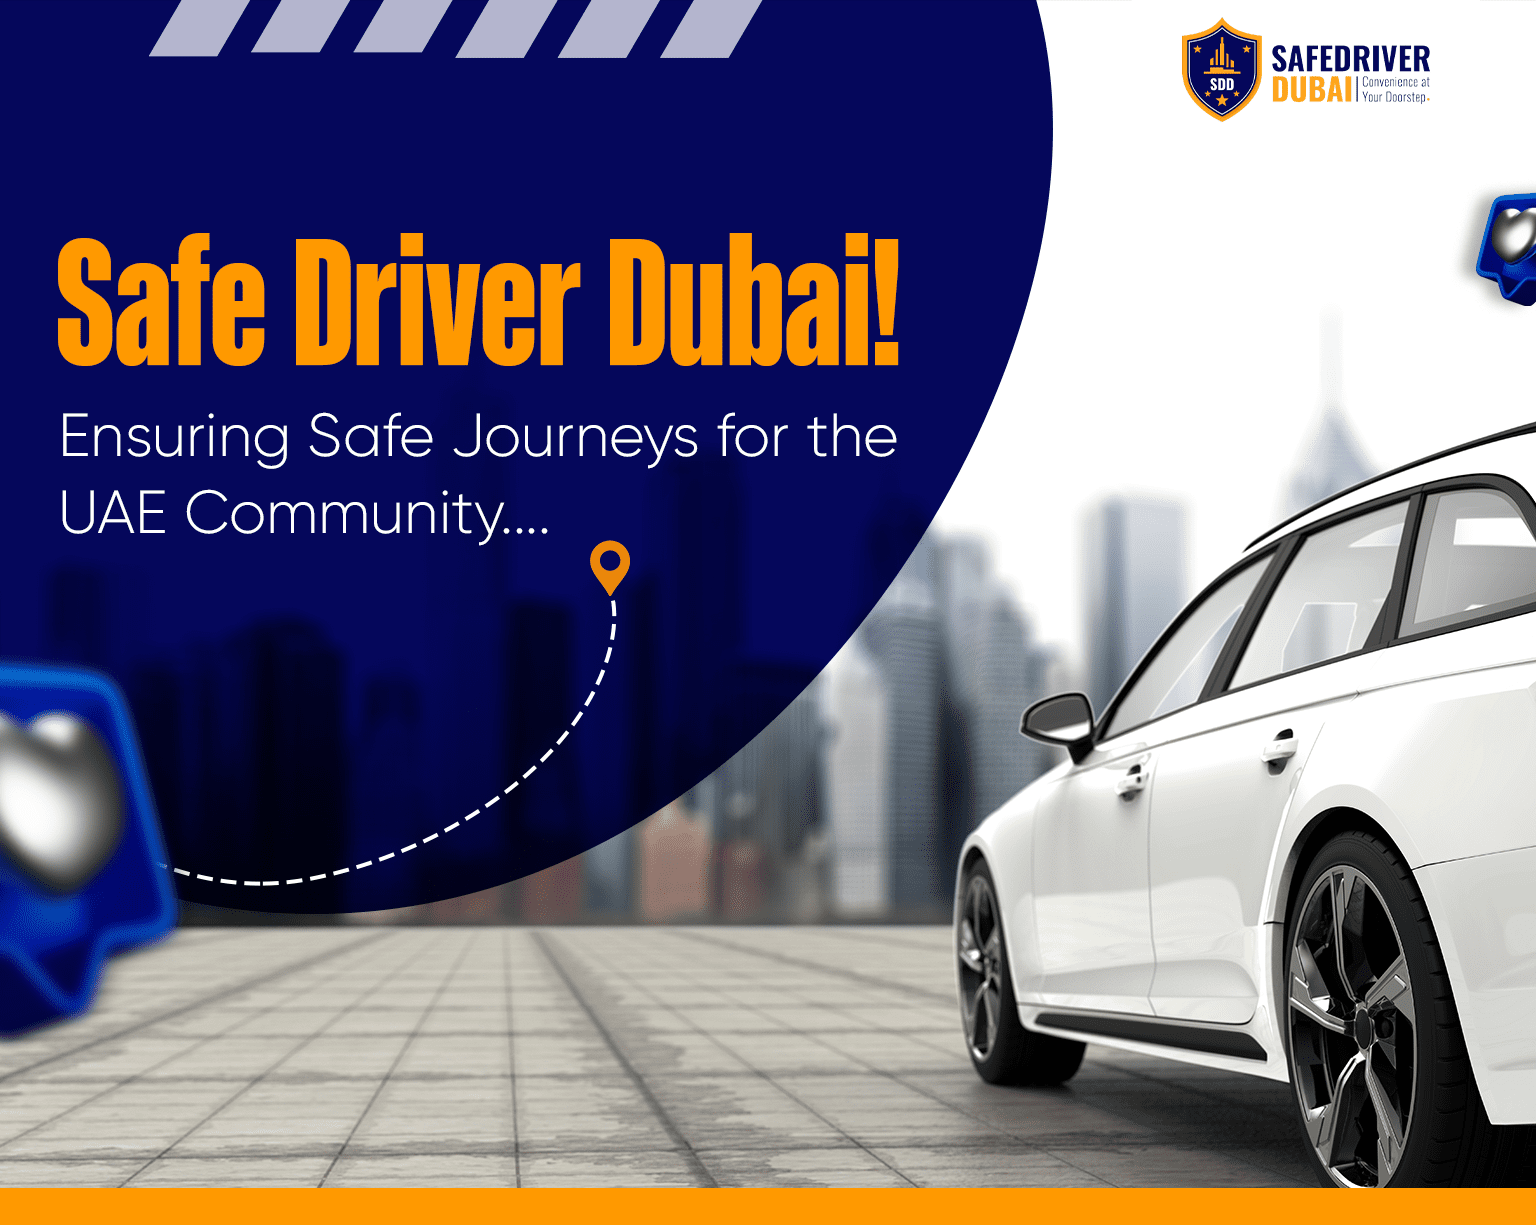 SafeDriver-Dubai-Ensuring-Safe-Journeys-for-The-UAE-Community